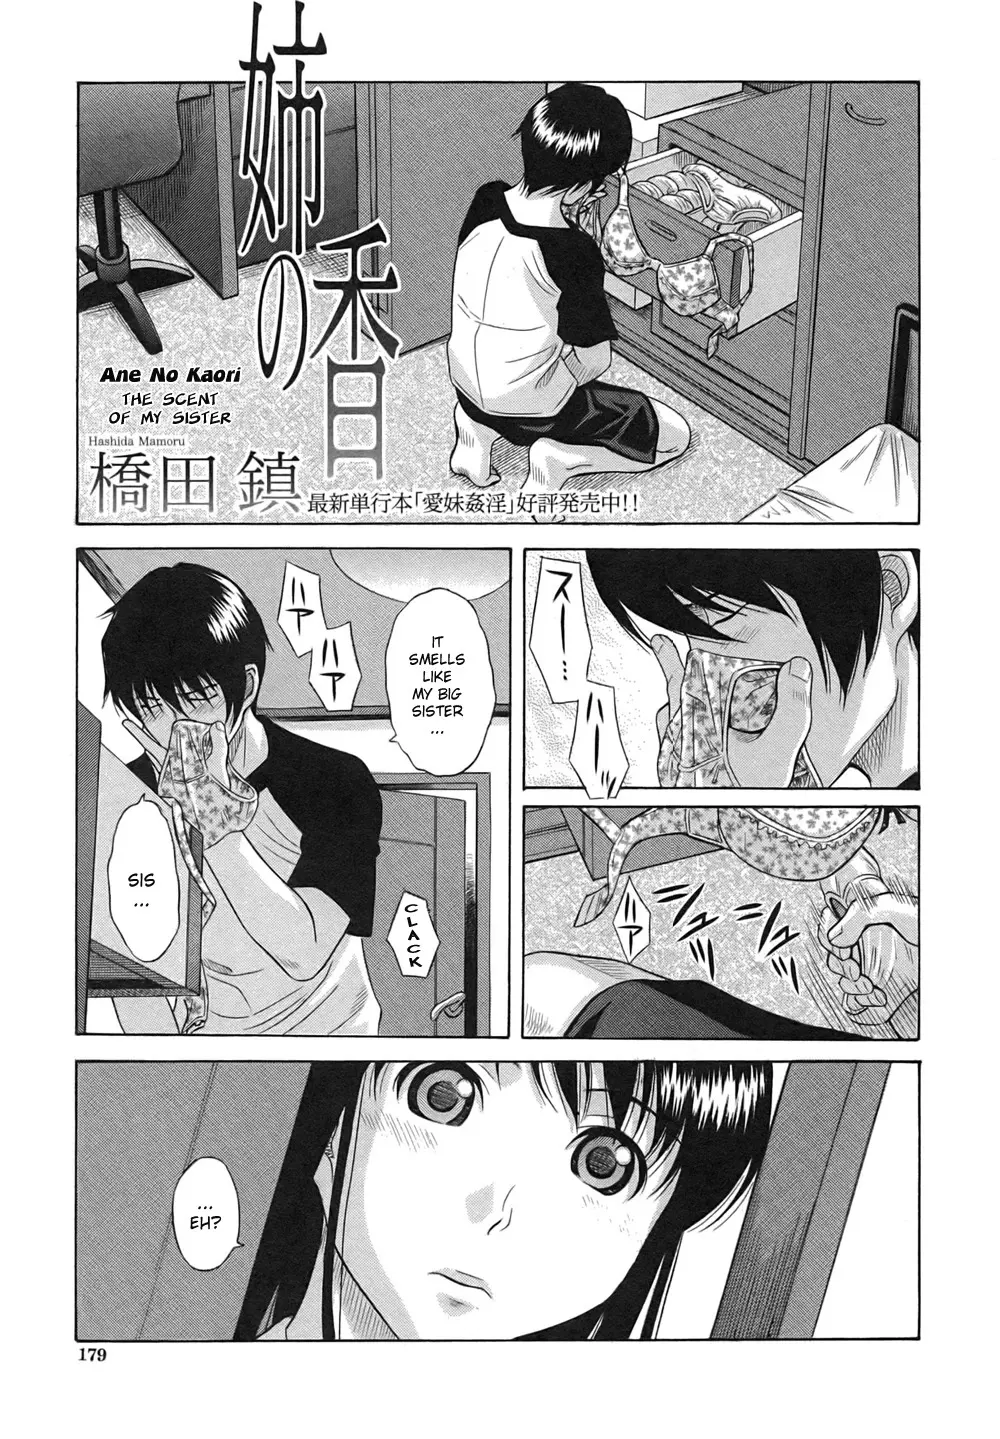 The Scent Of My Sister - Hashida Mamoru Page.1